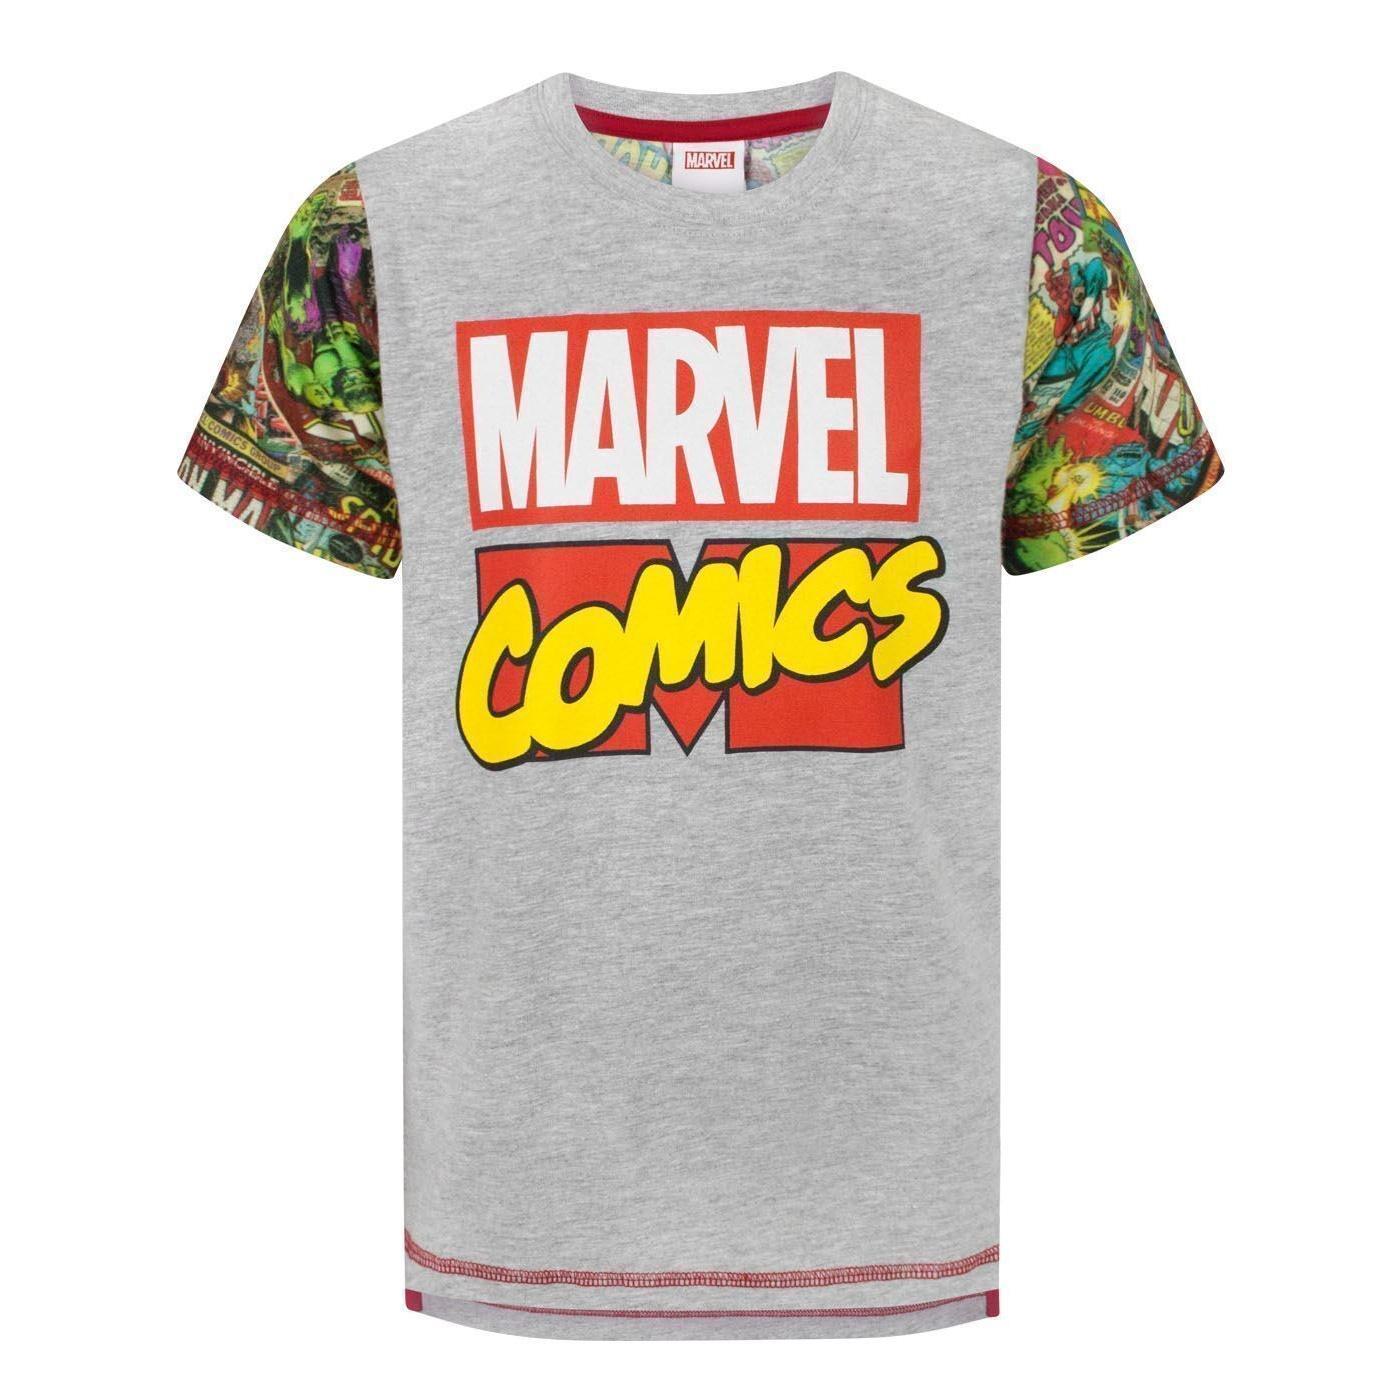 Marvel Comics Boys Printed T-Shirt (Heather Grey/Red/Green) (7-8 Years)